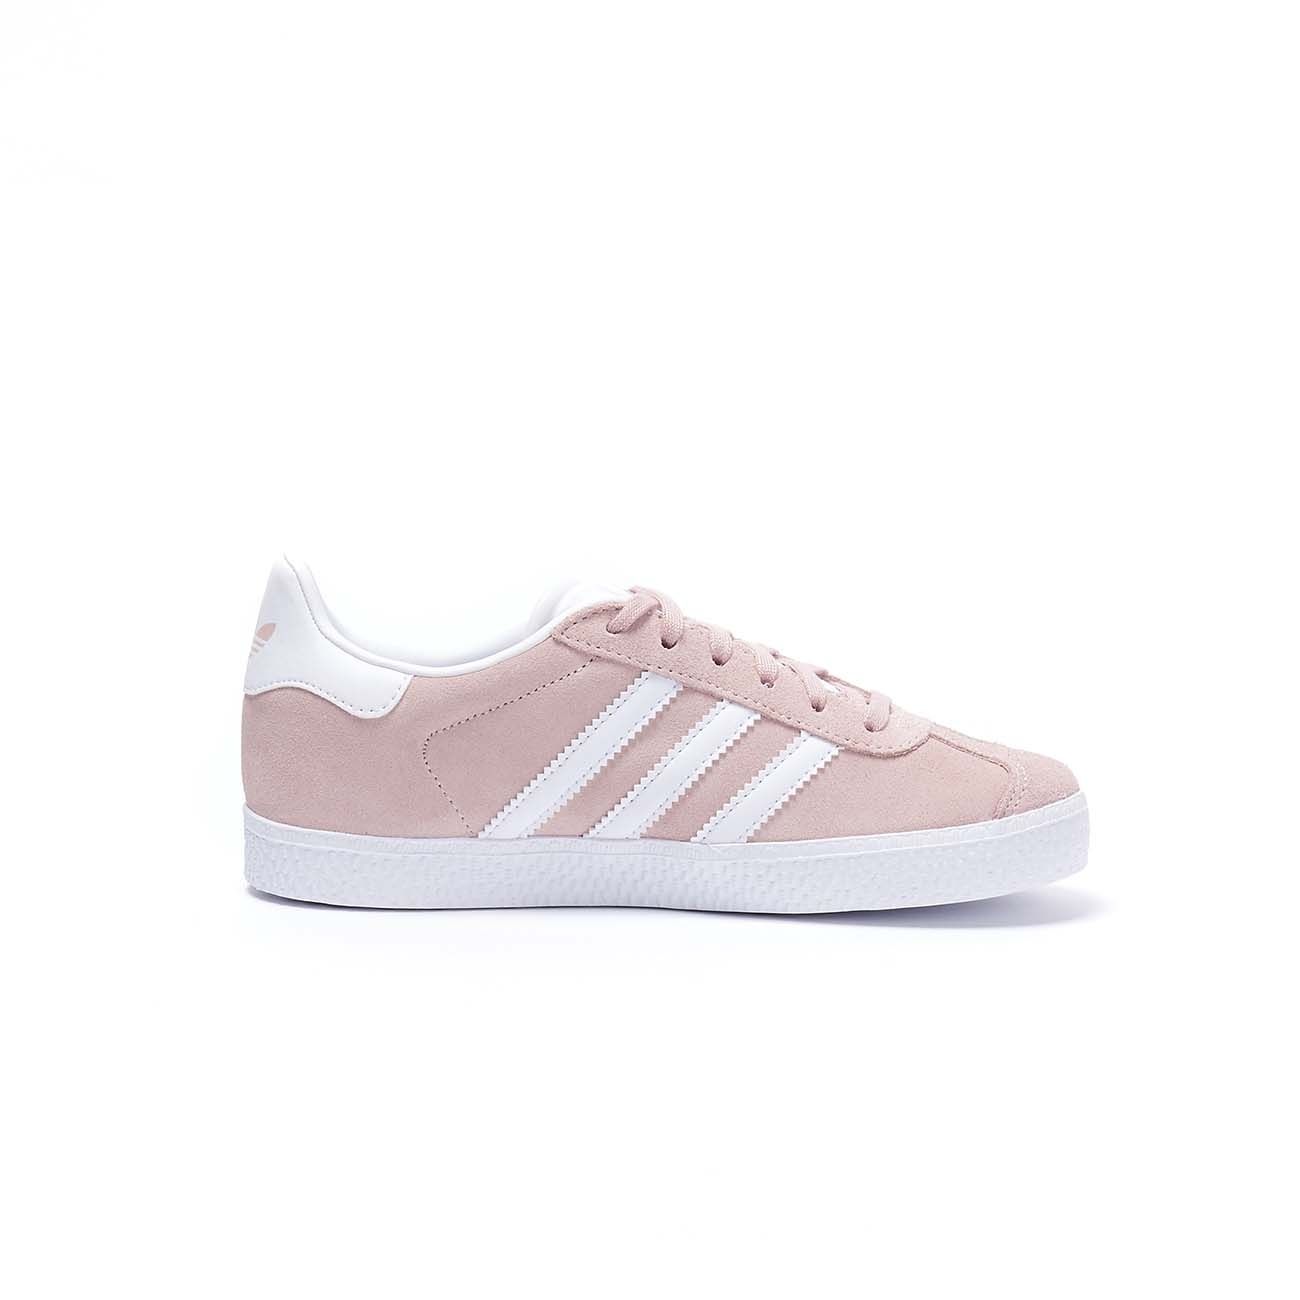 adidas gazelle ice pink